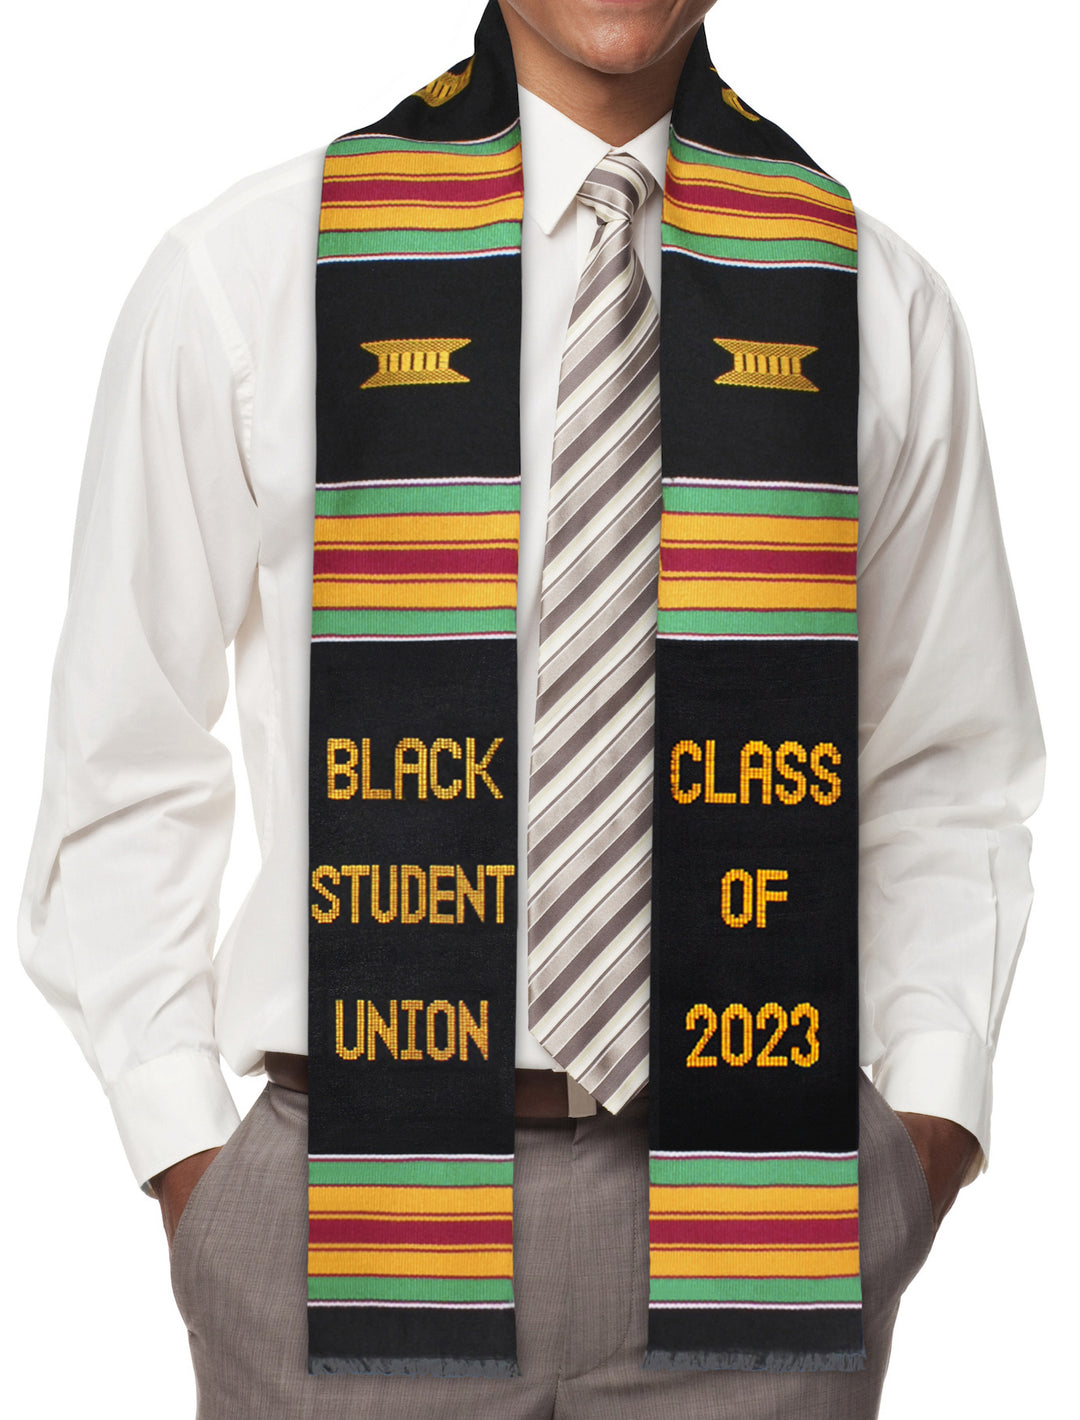 BSU Black student union 2023 kente stole